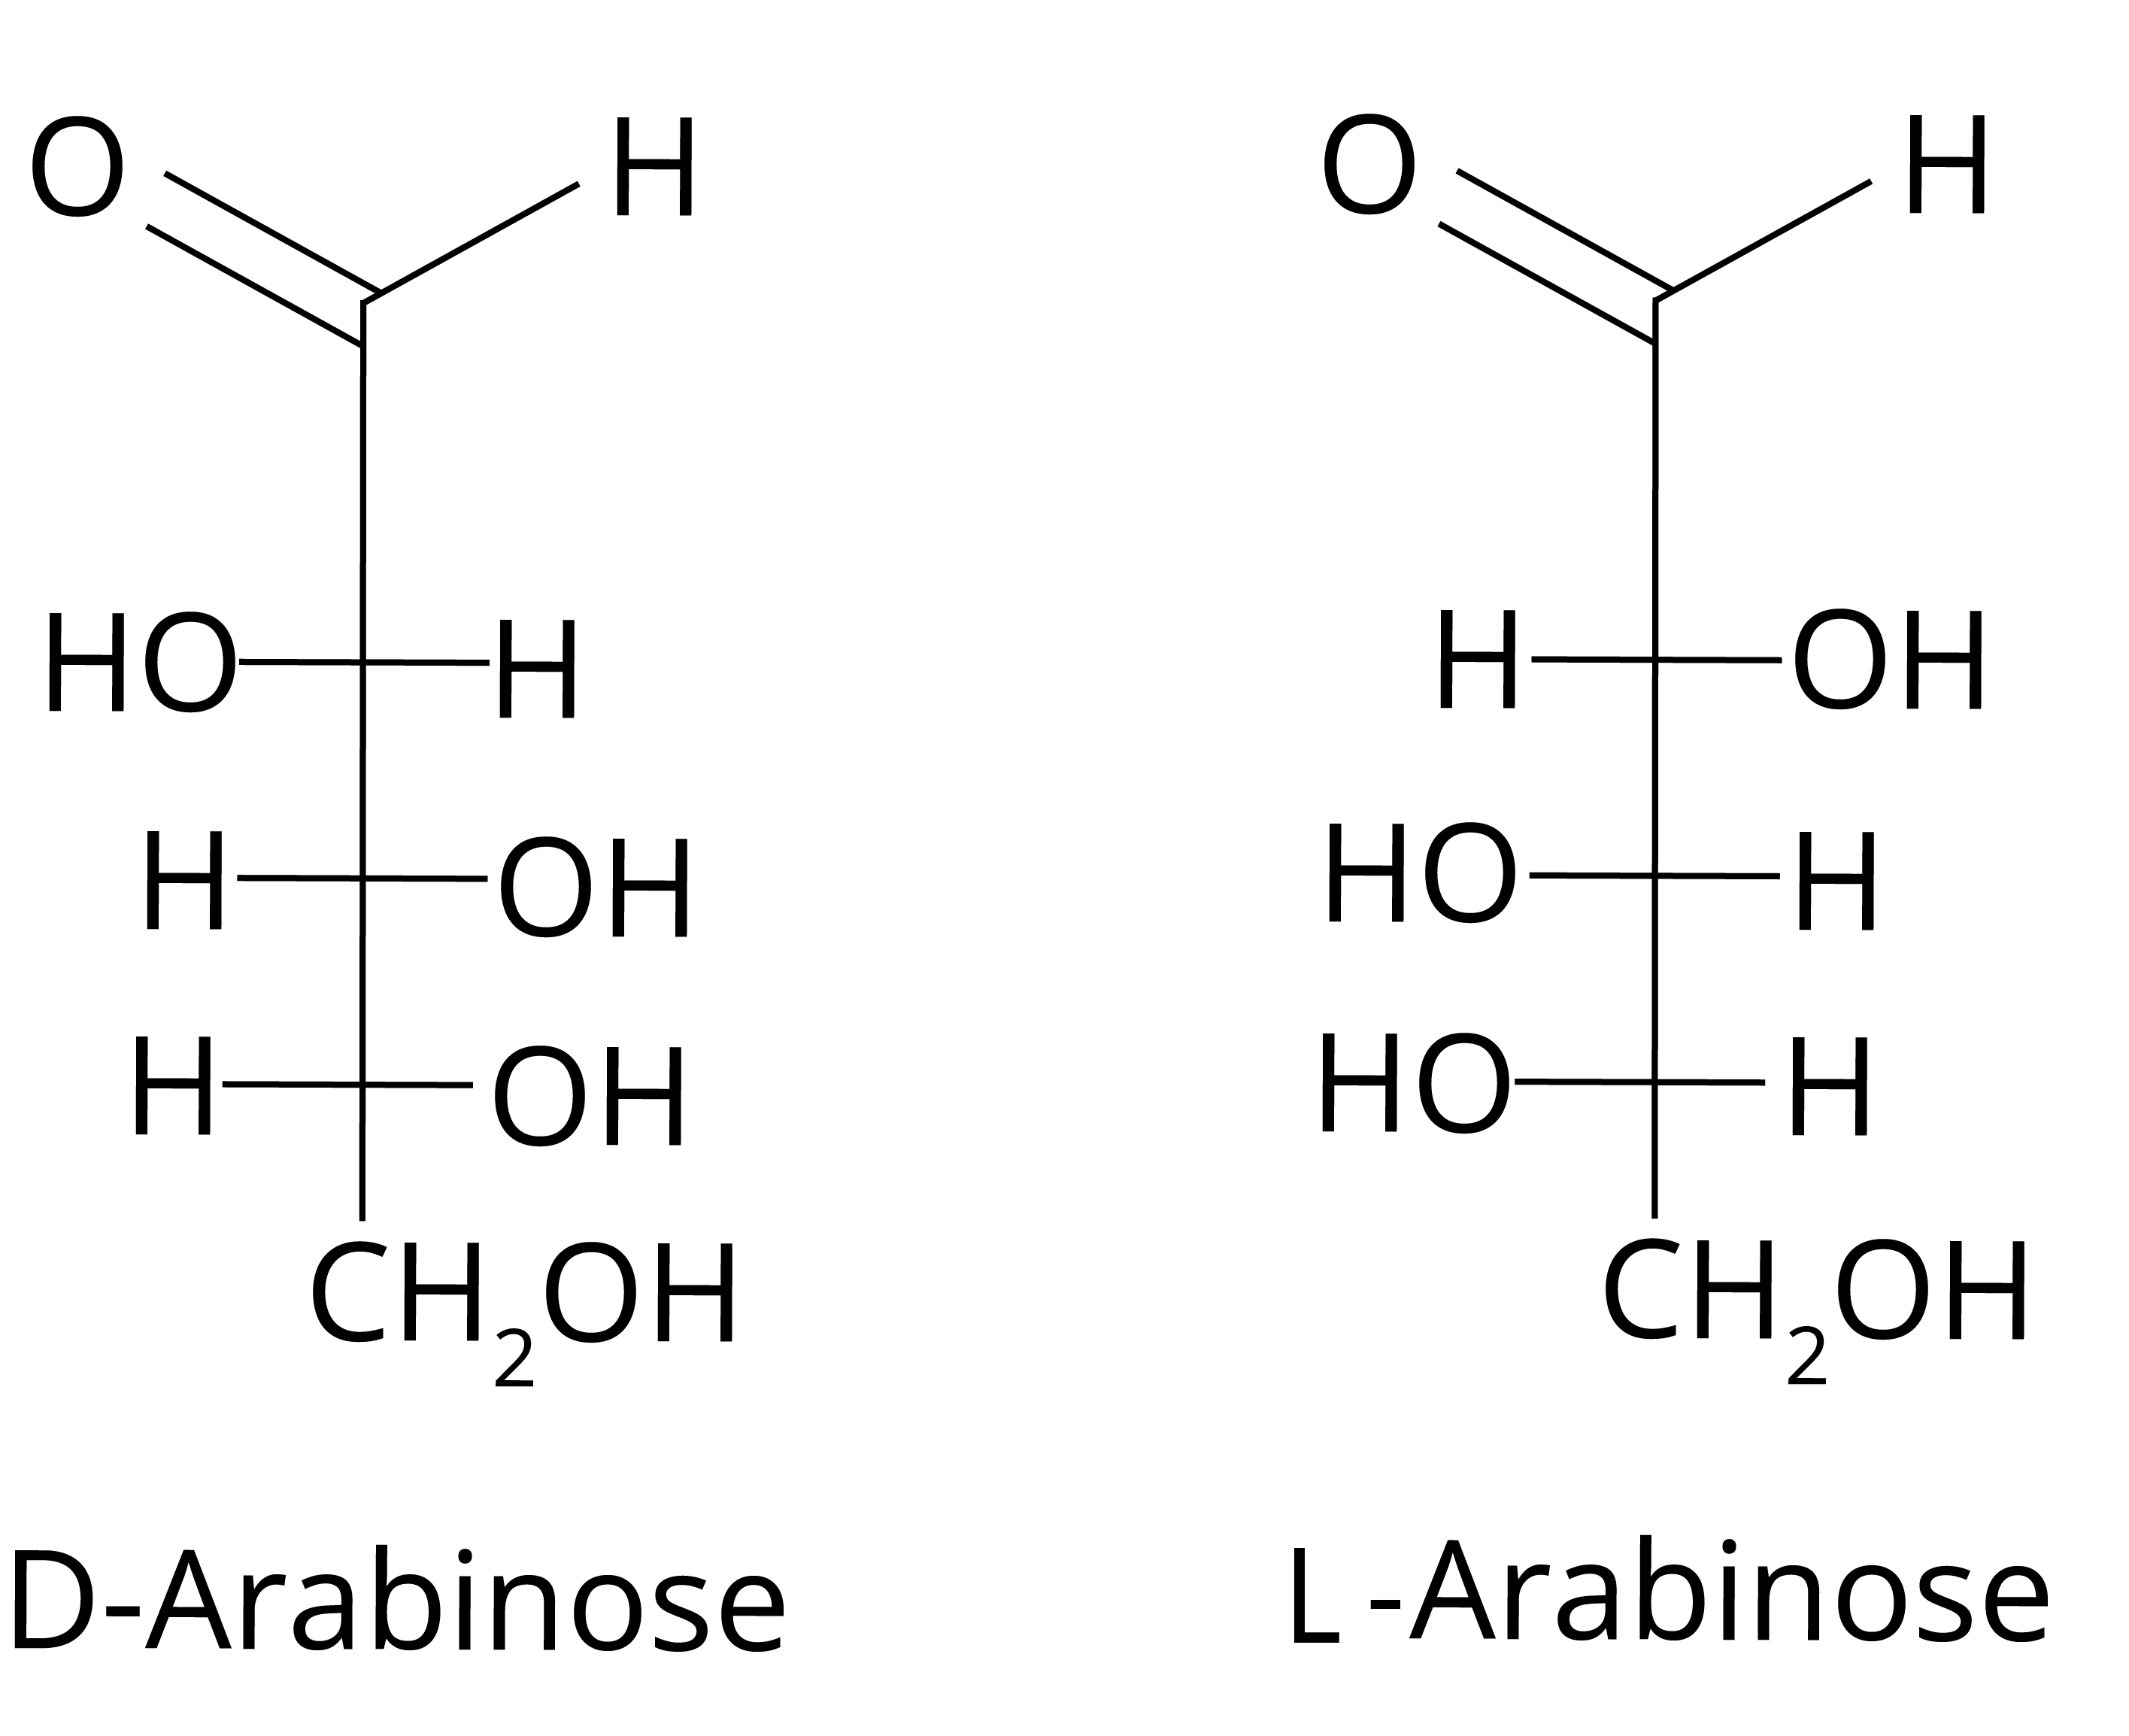 Arabinose is a pentose monosaccharide structure